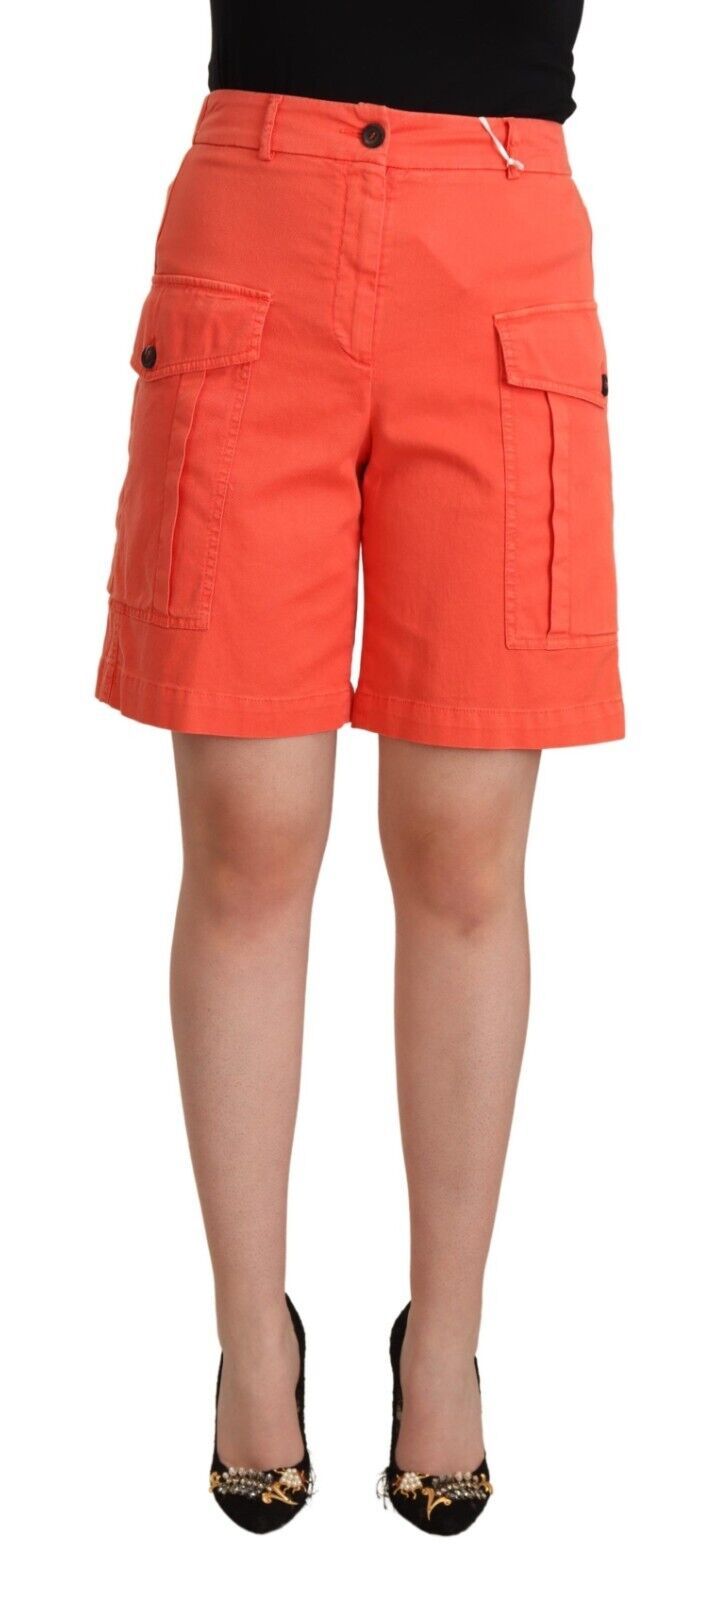 Peserico Chic High-Waisted Cargo Shorts in Vibrant Women's Orange